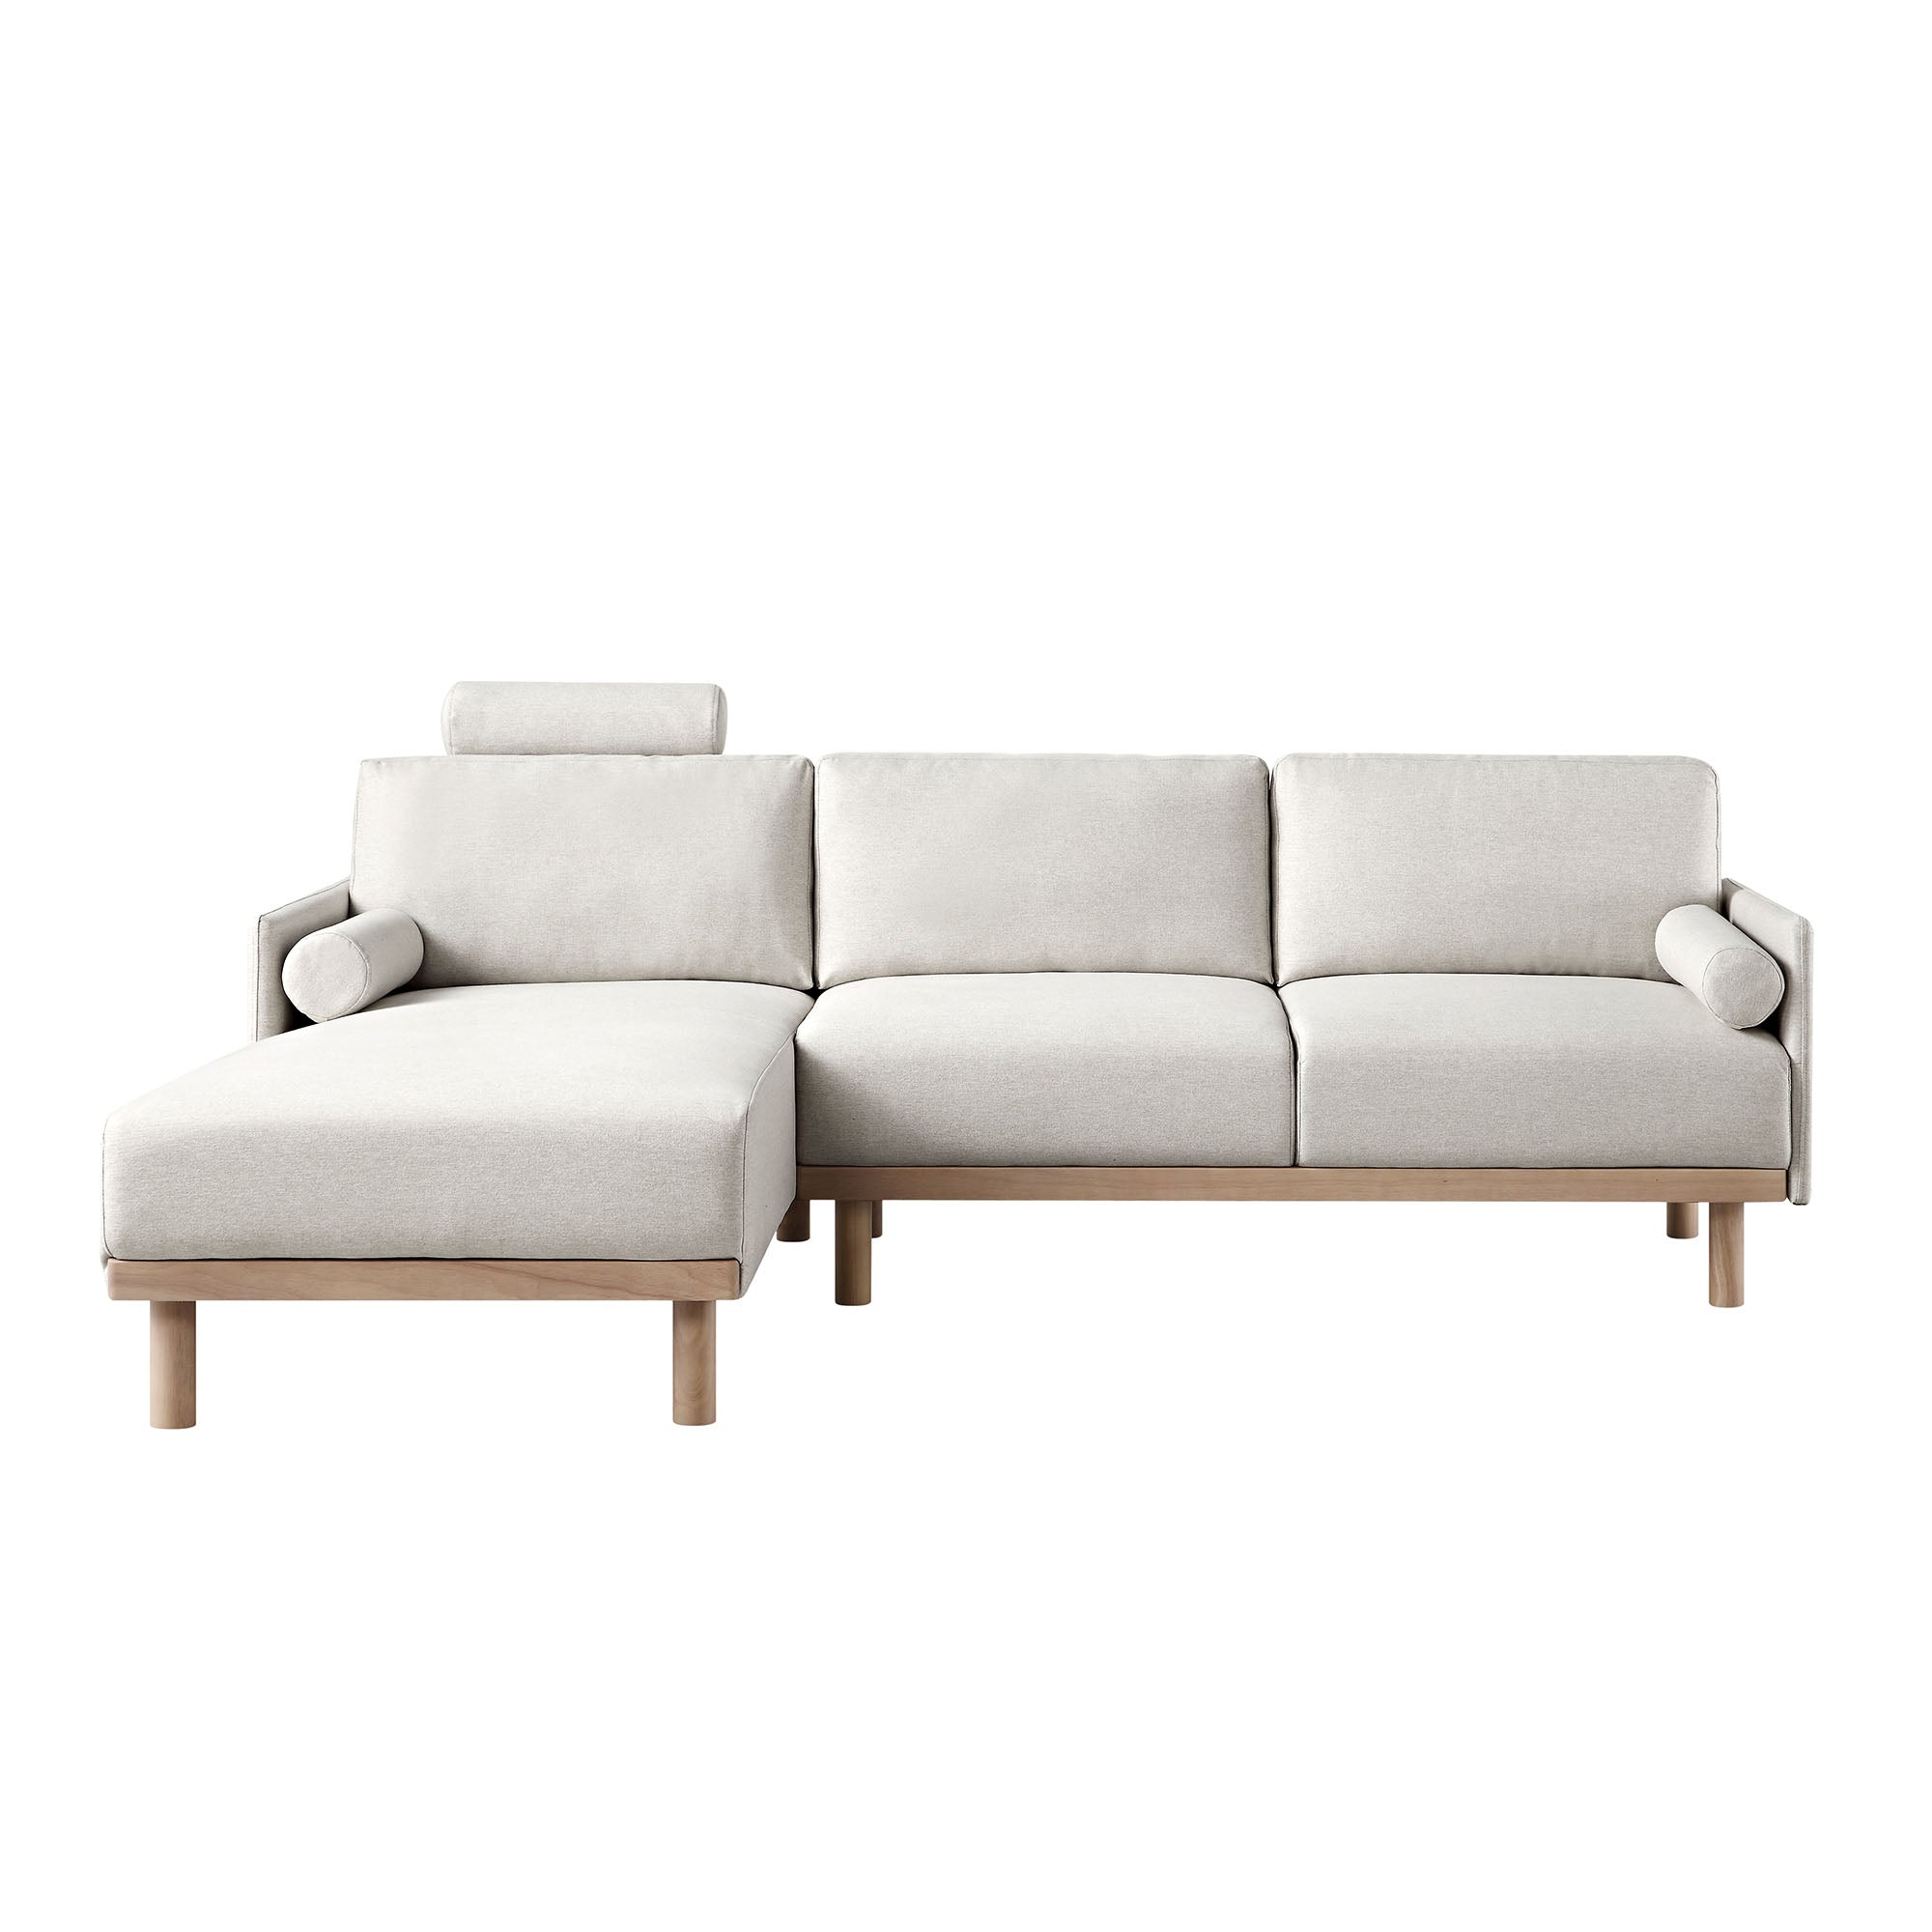 Timber Oatmeal Fabric Sofa, Large 3-Seater Chaise Sofa Left Hand